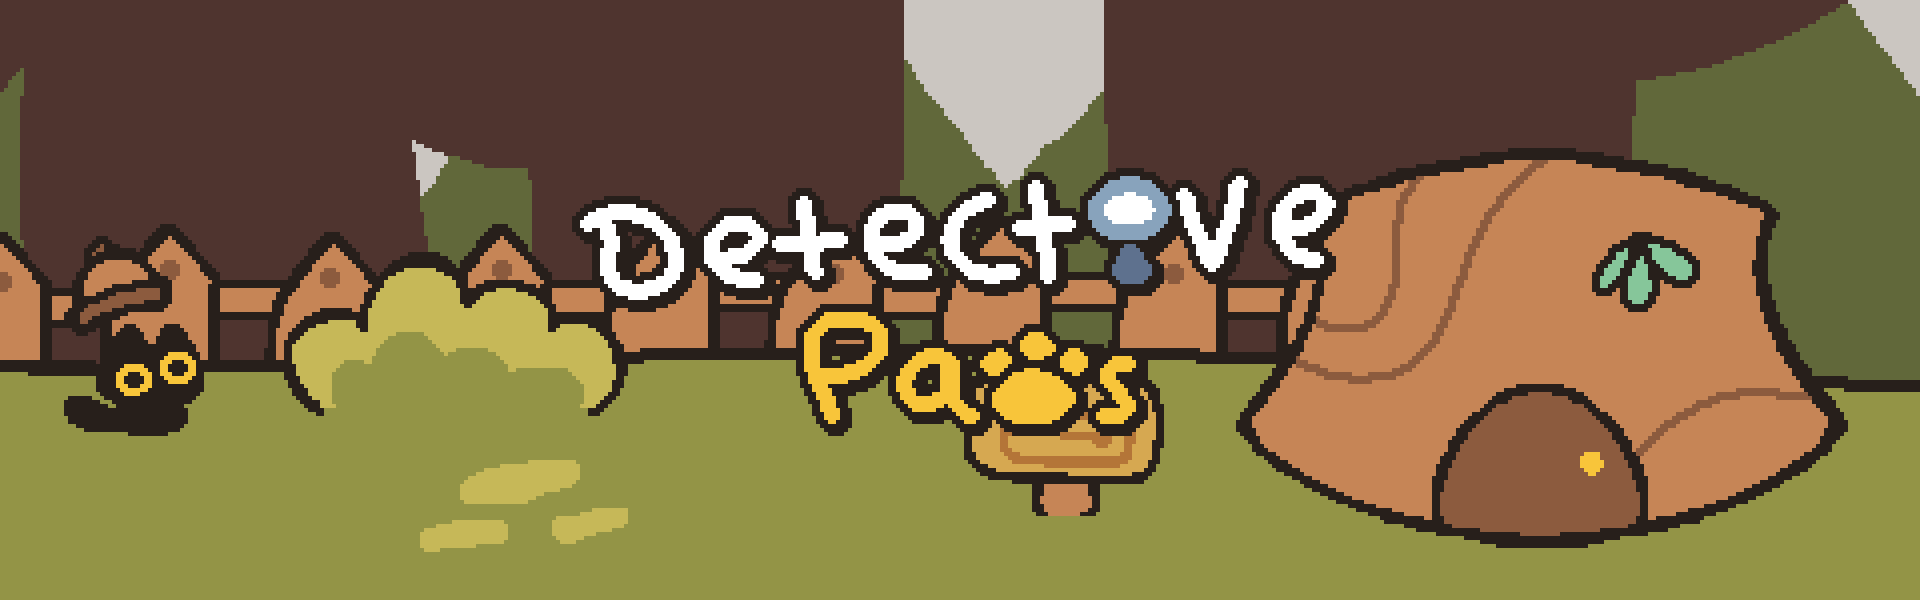 Detective Paws